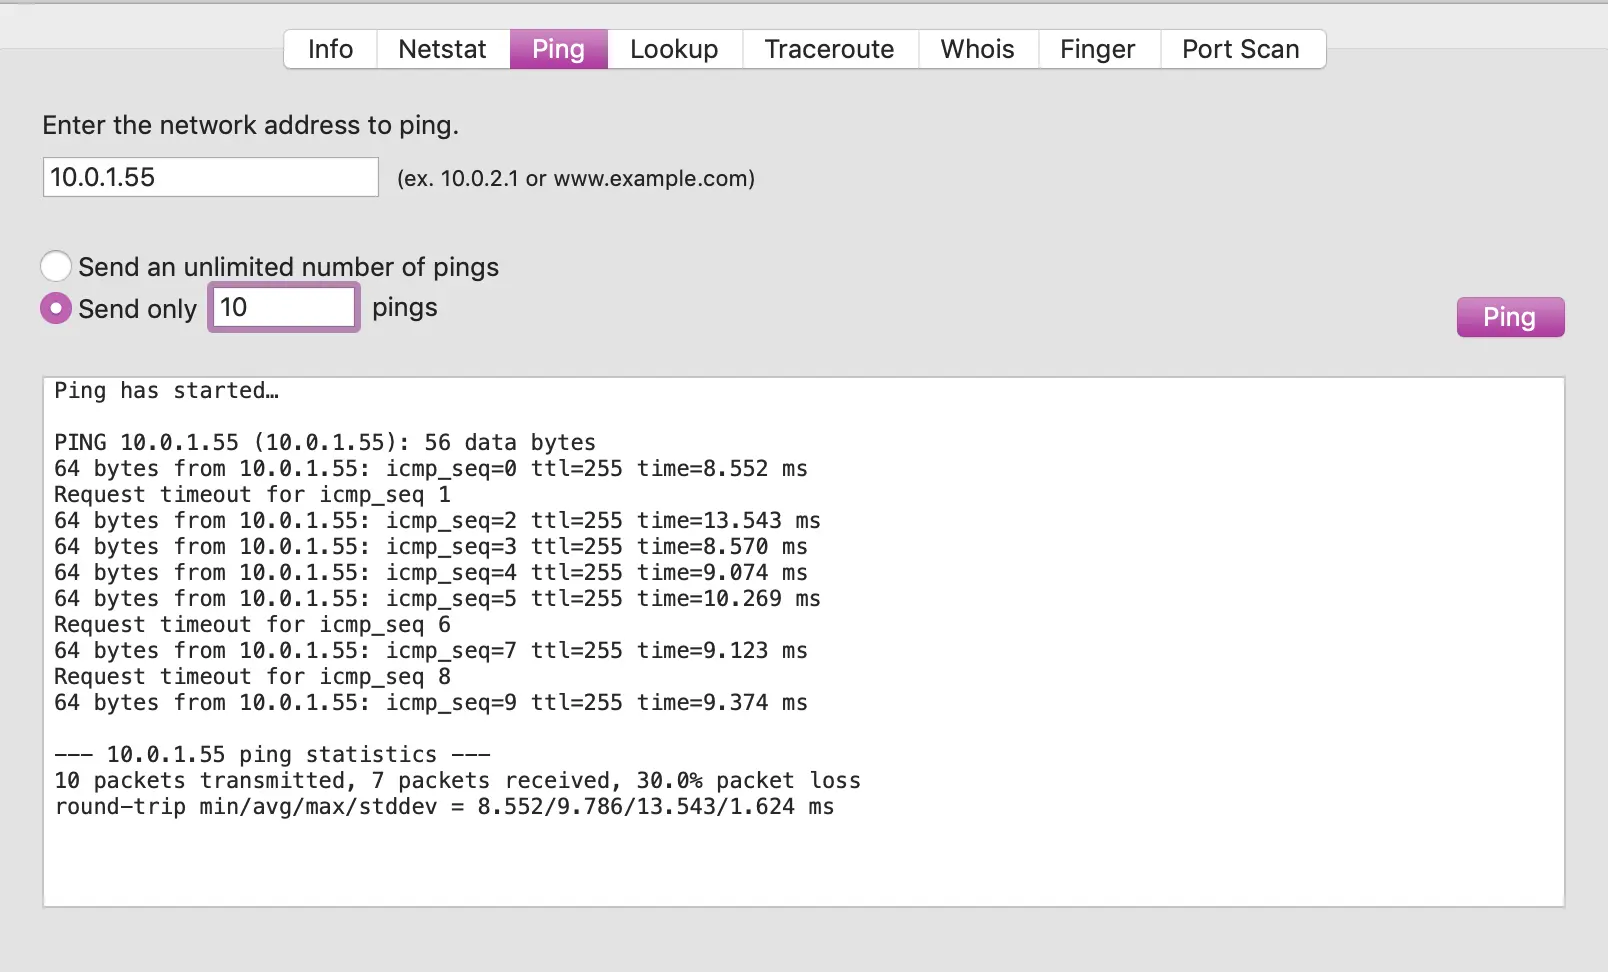 hewlett packard 4050n printer error offending command mac - How do I troubleshoot my HP printer on my Mac